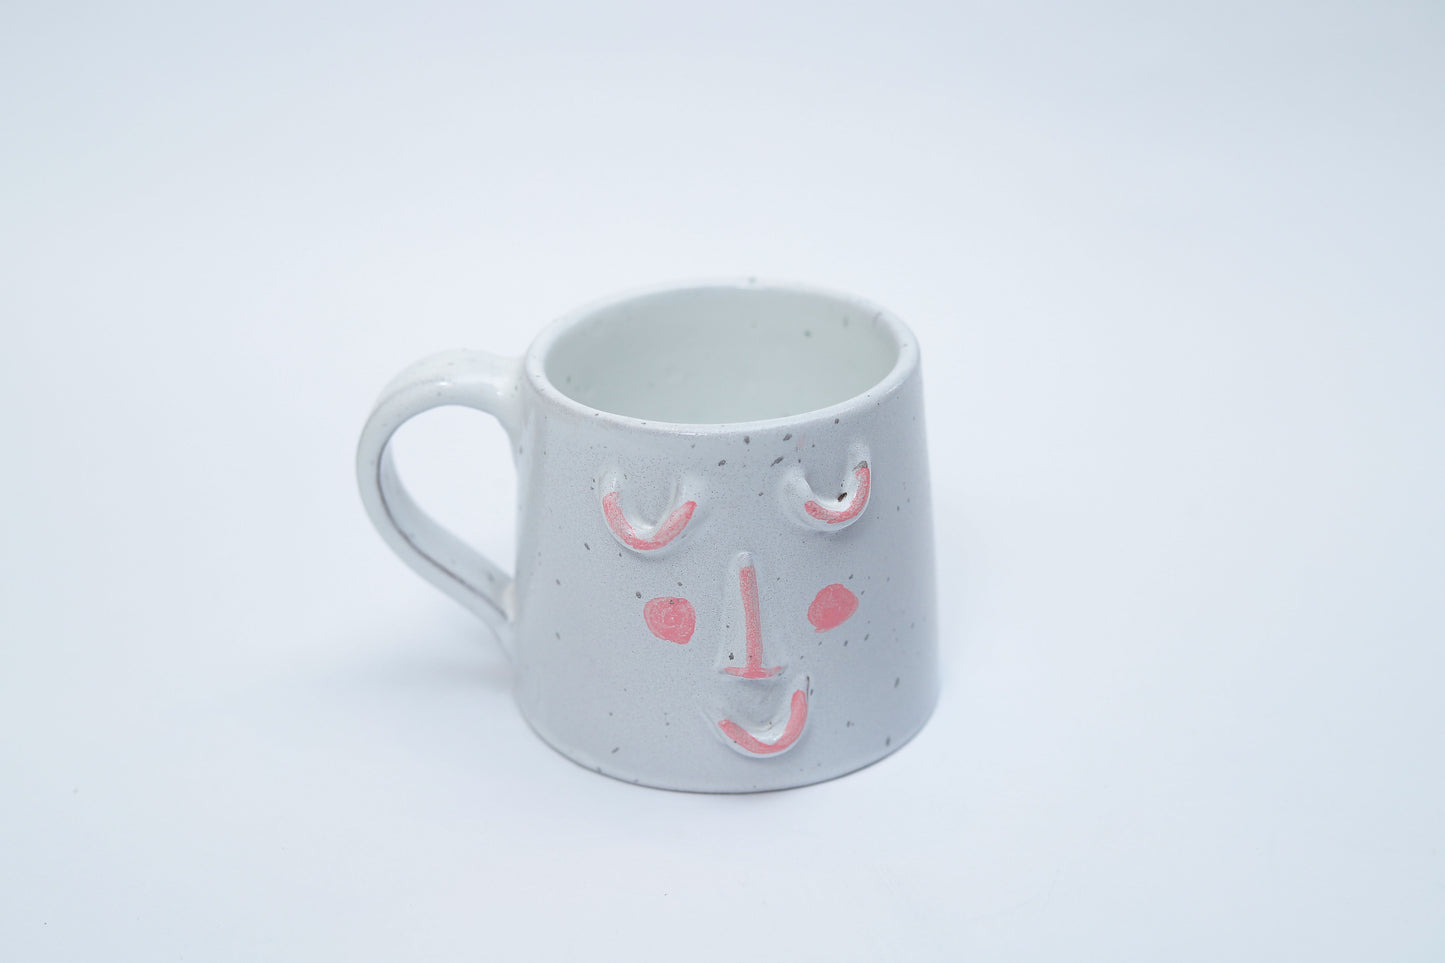 Smiley Face Mug